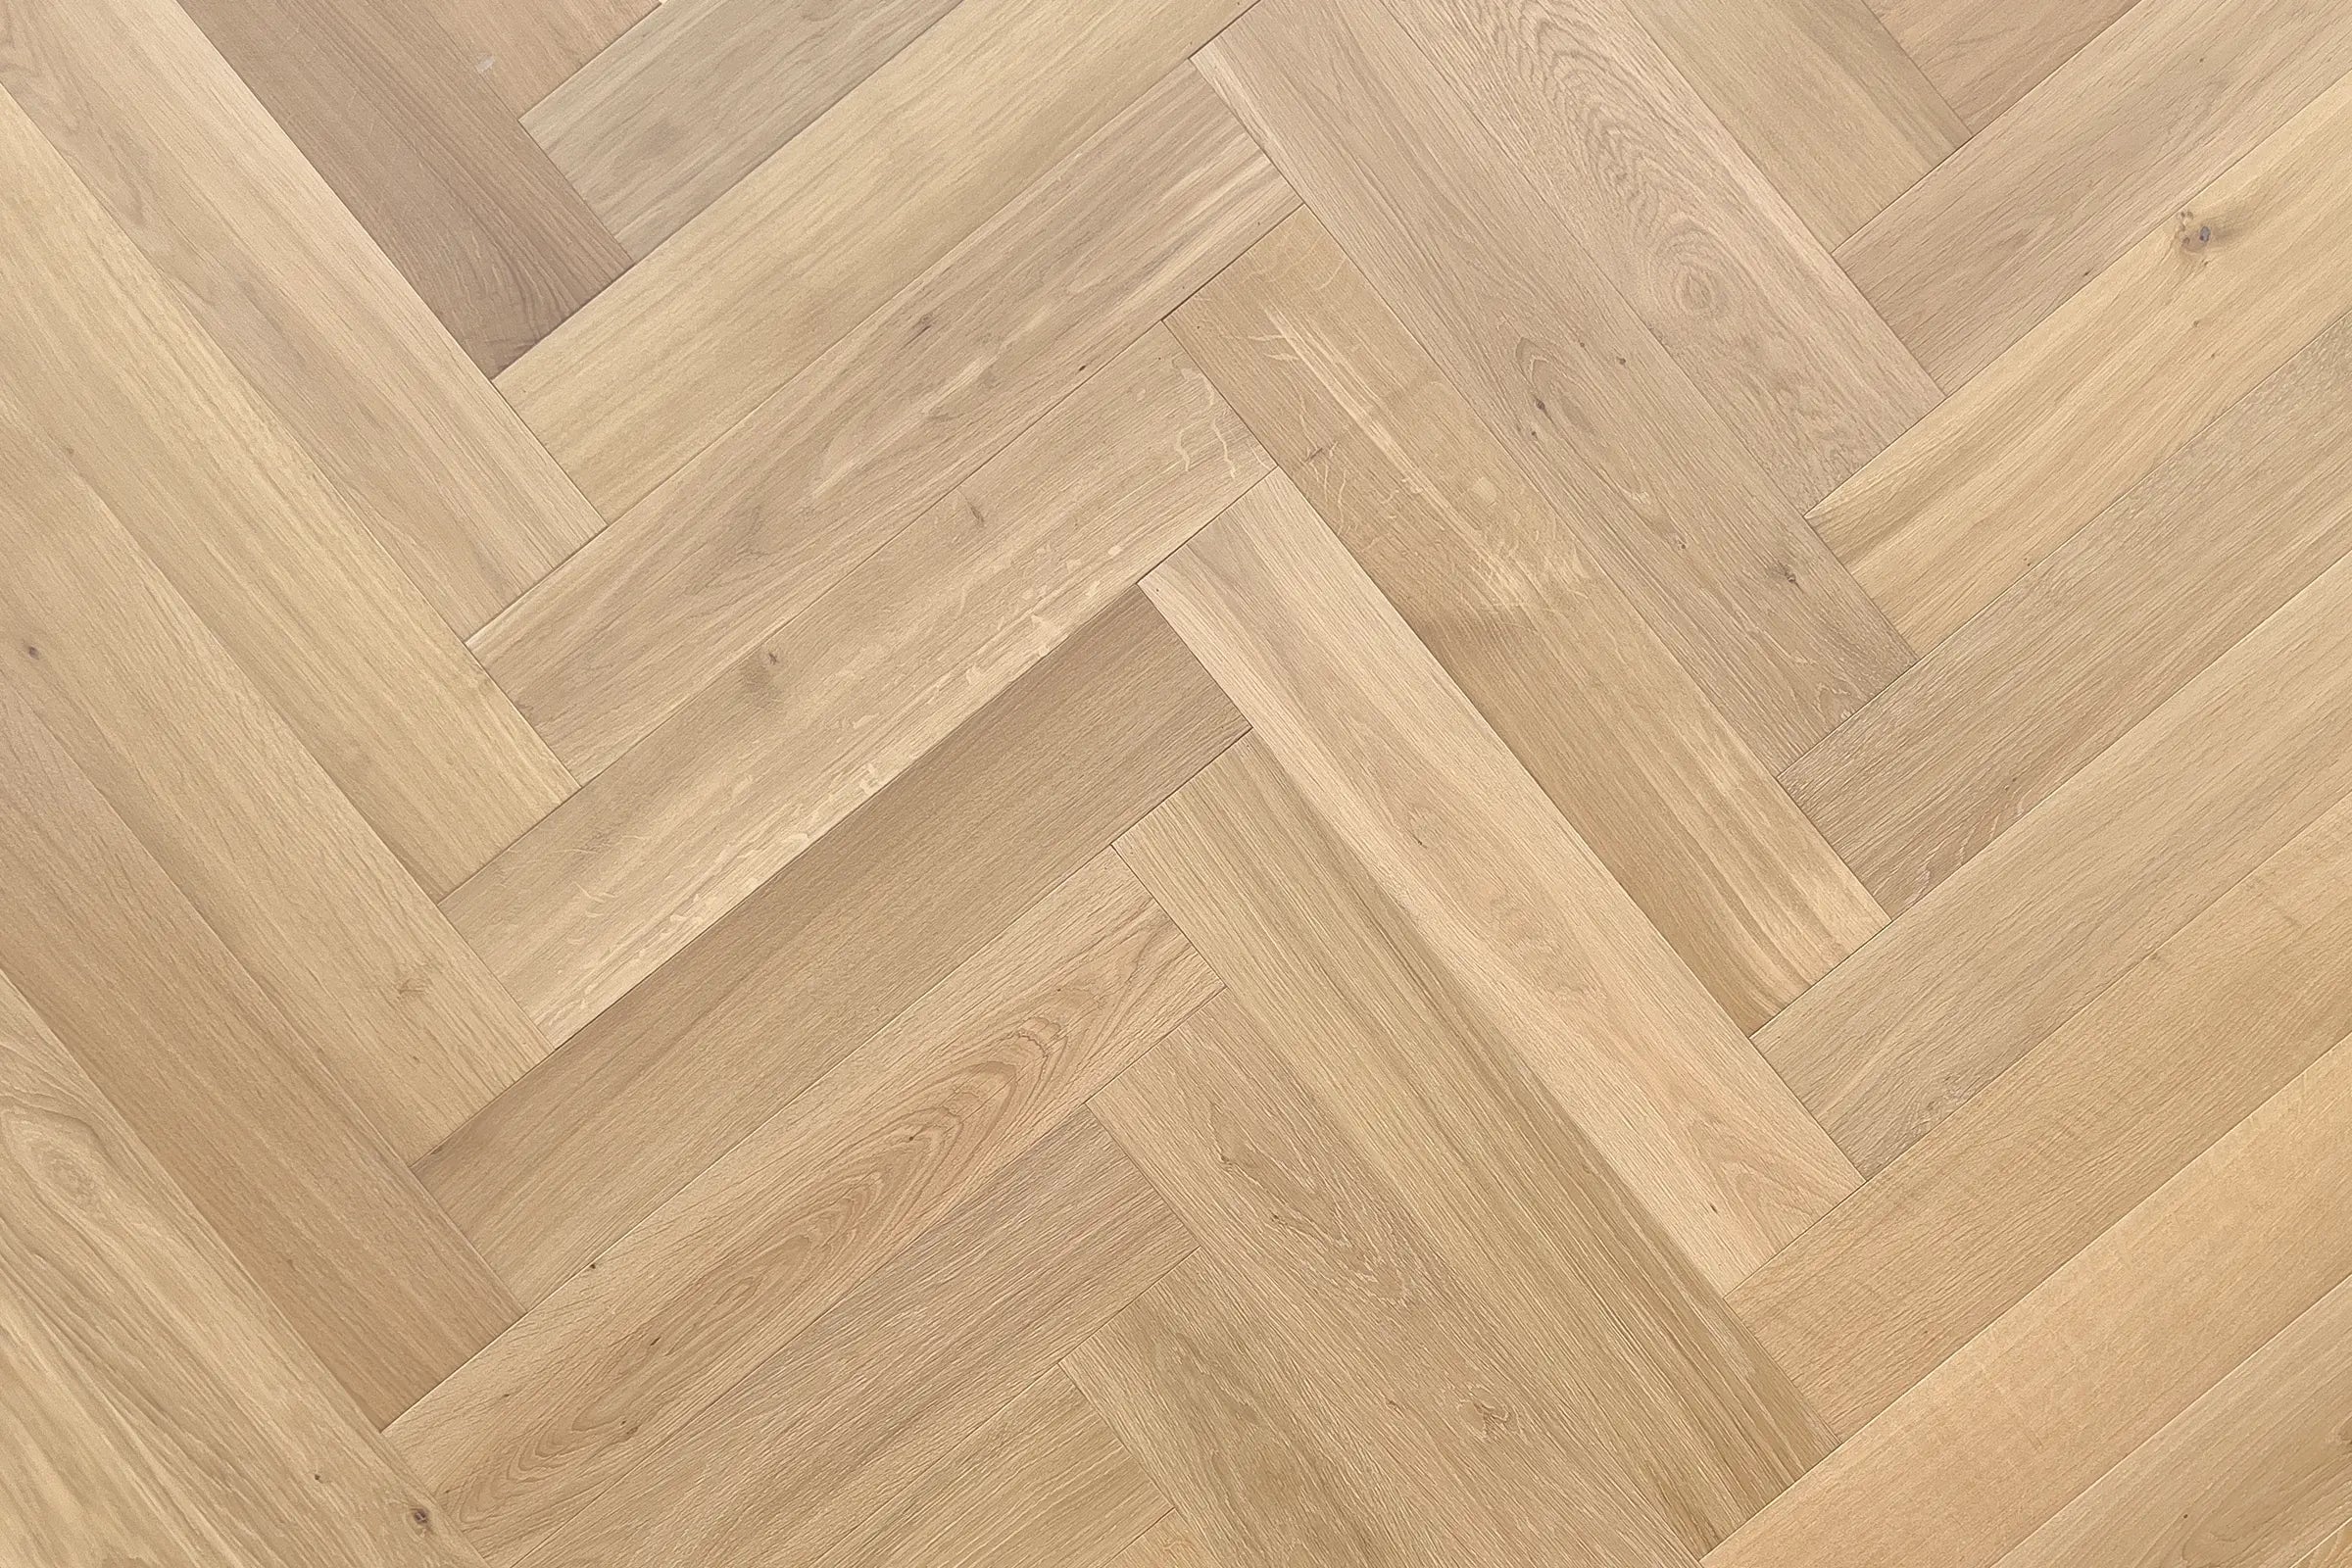 Loire White Oak herringbone sustainable wood planks flooring by WD Walls